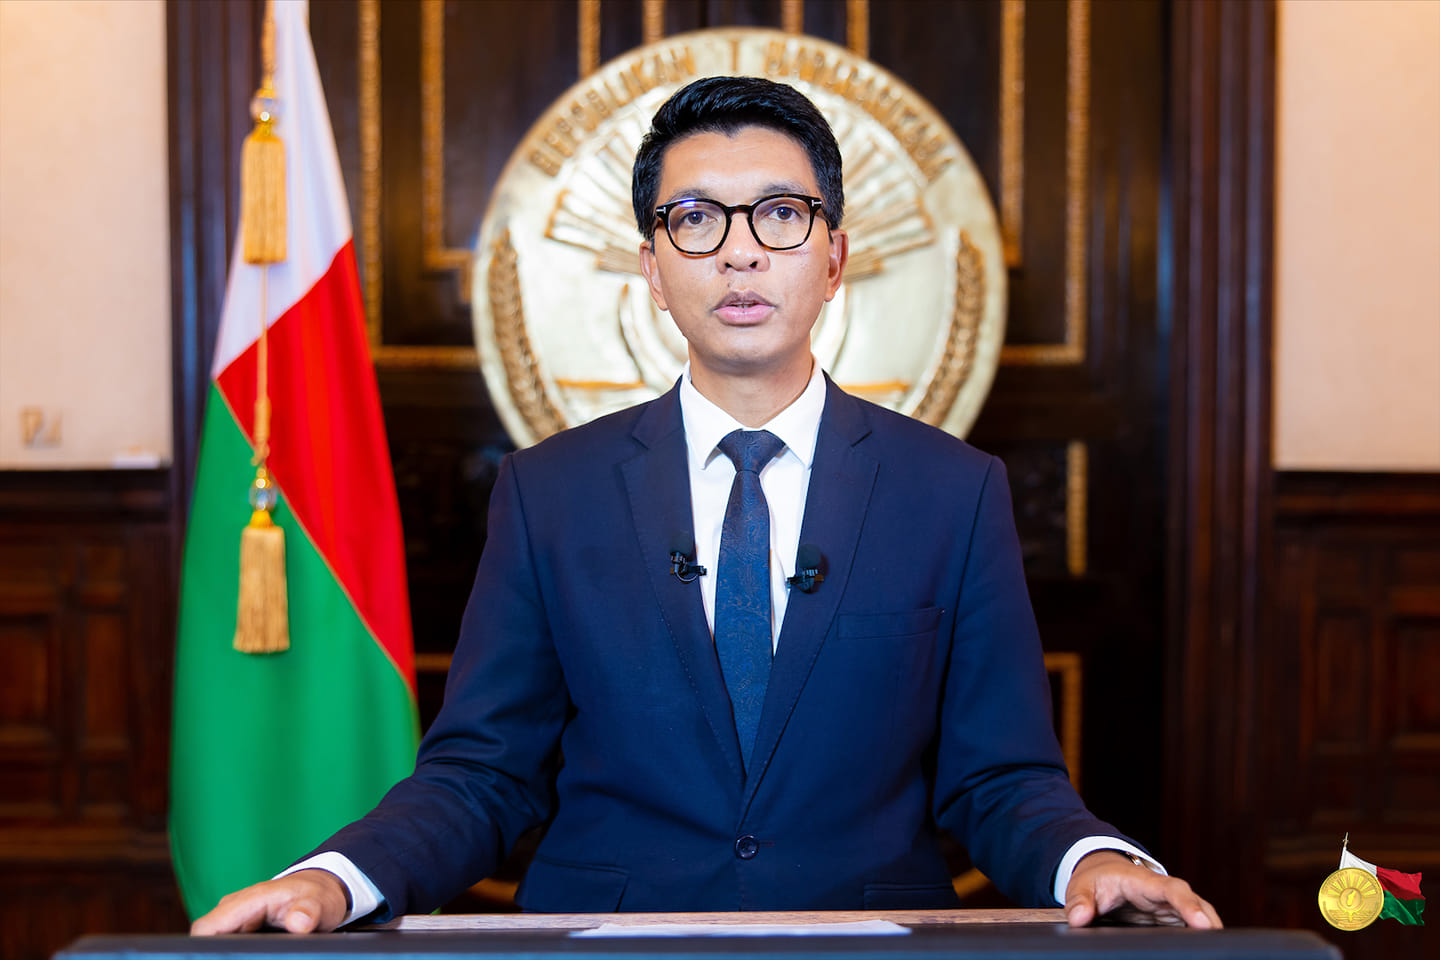 Andry Rajoelina, President of Madagascar